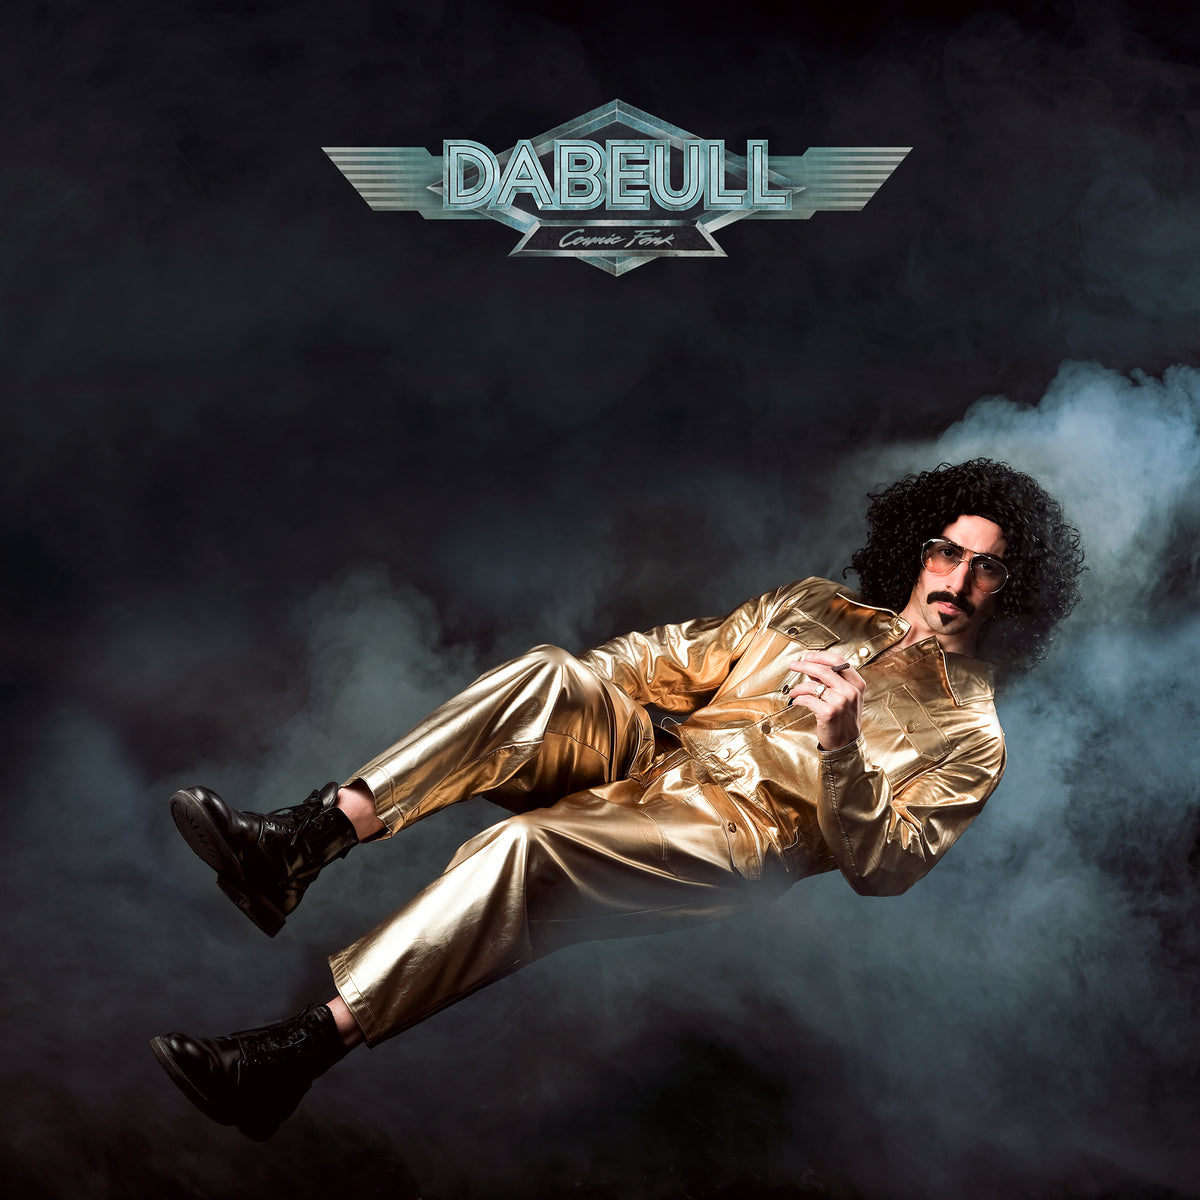 Dabeull - DX7 7inch レコード - レコード